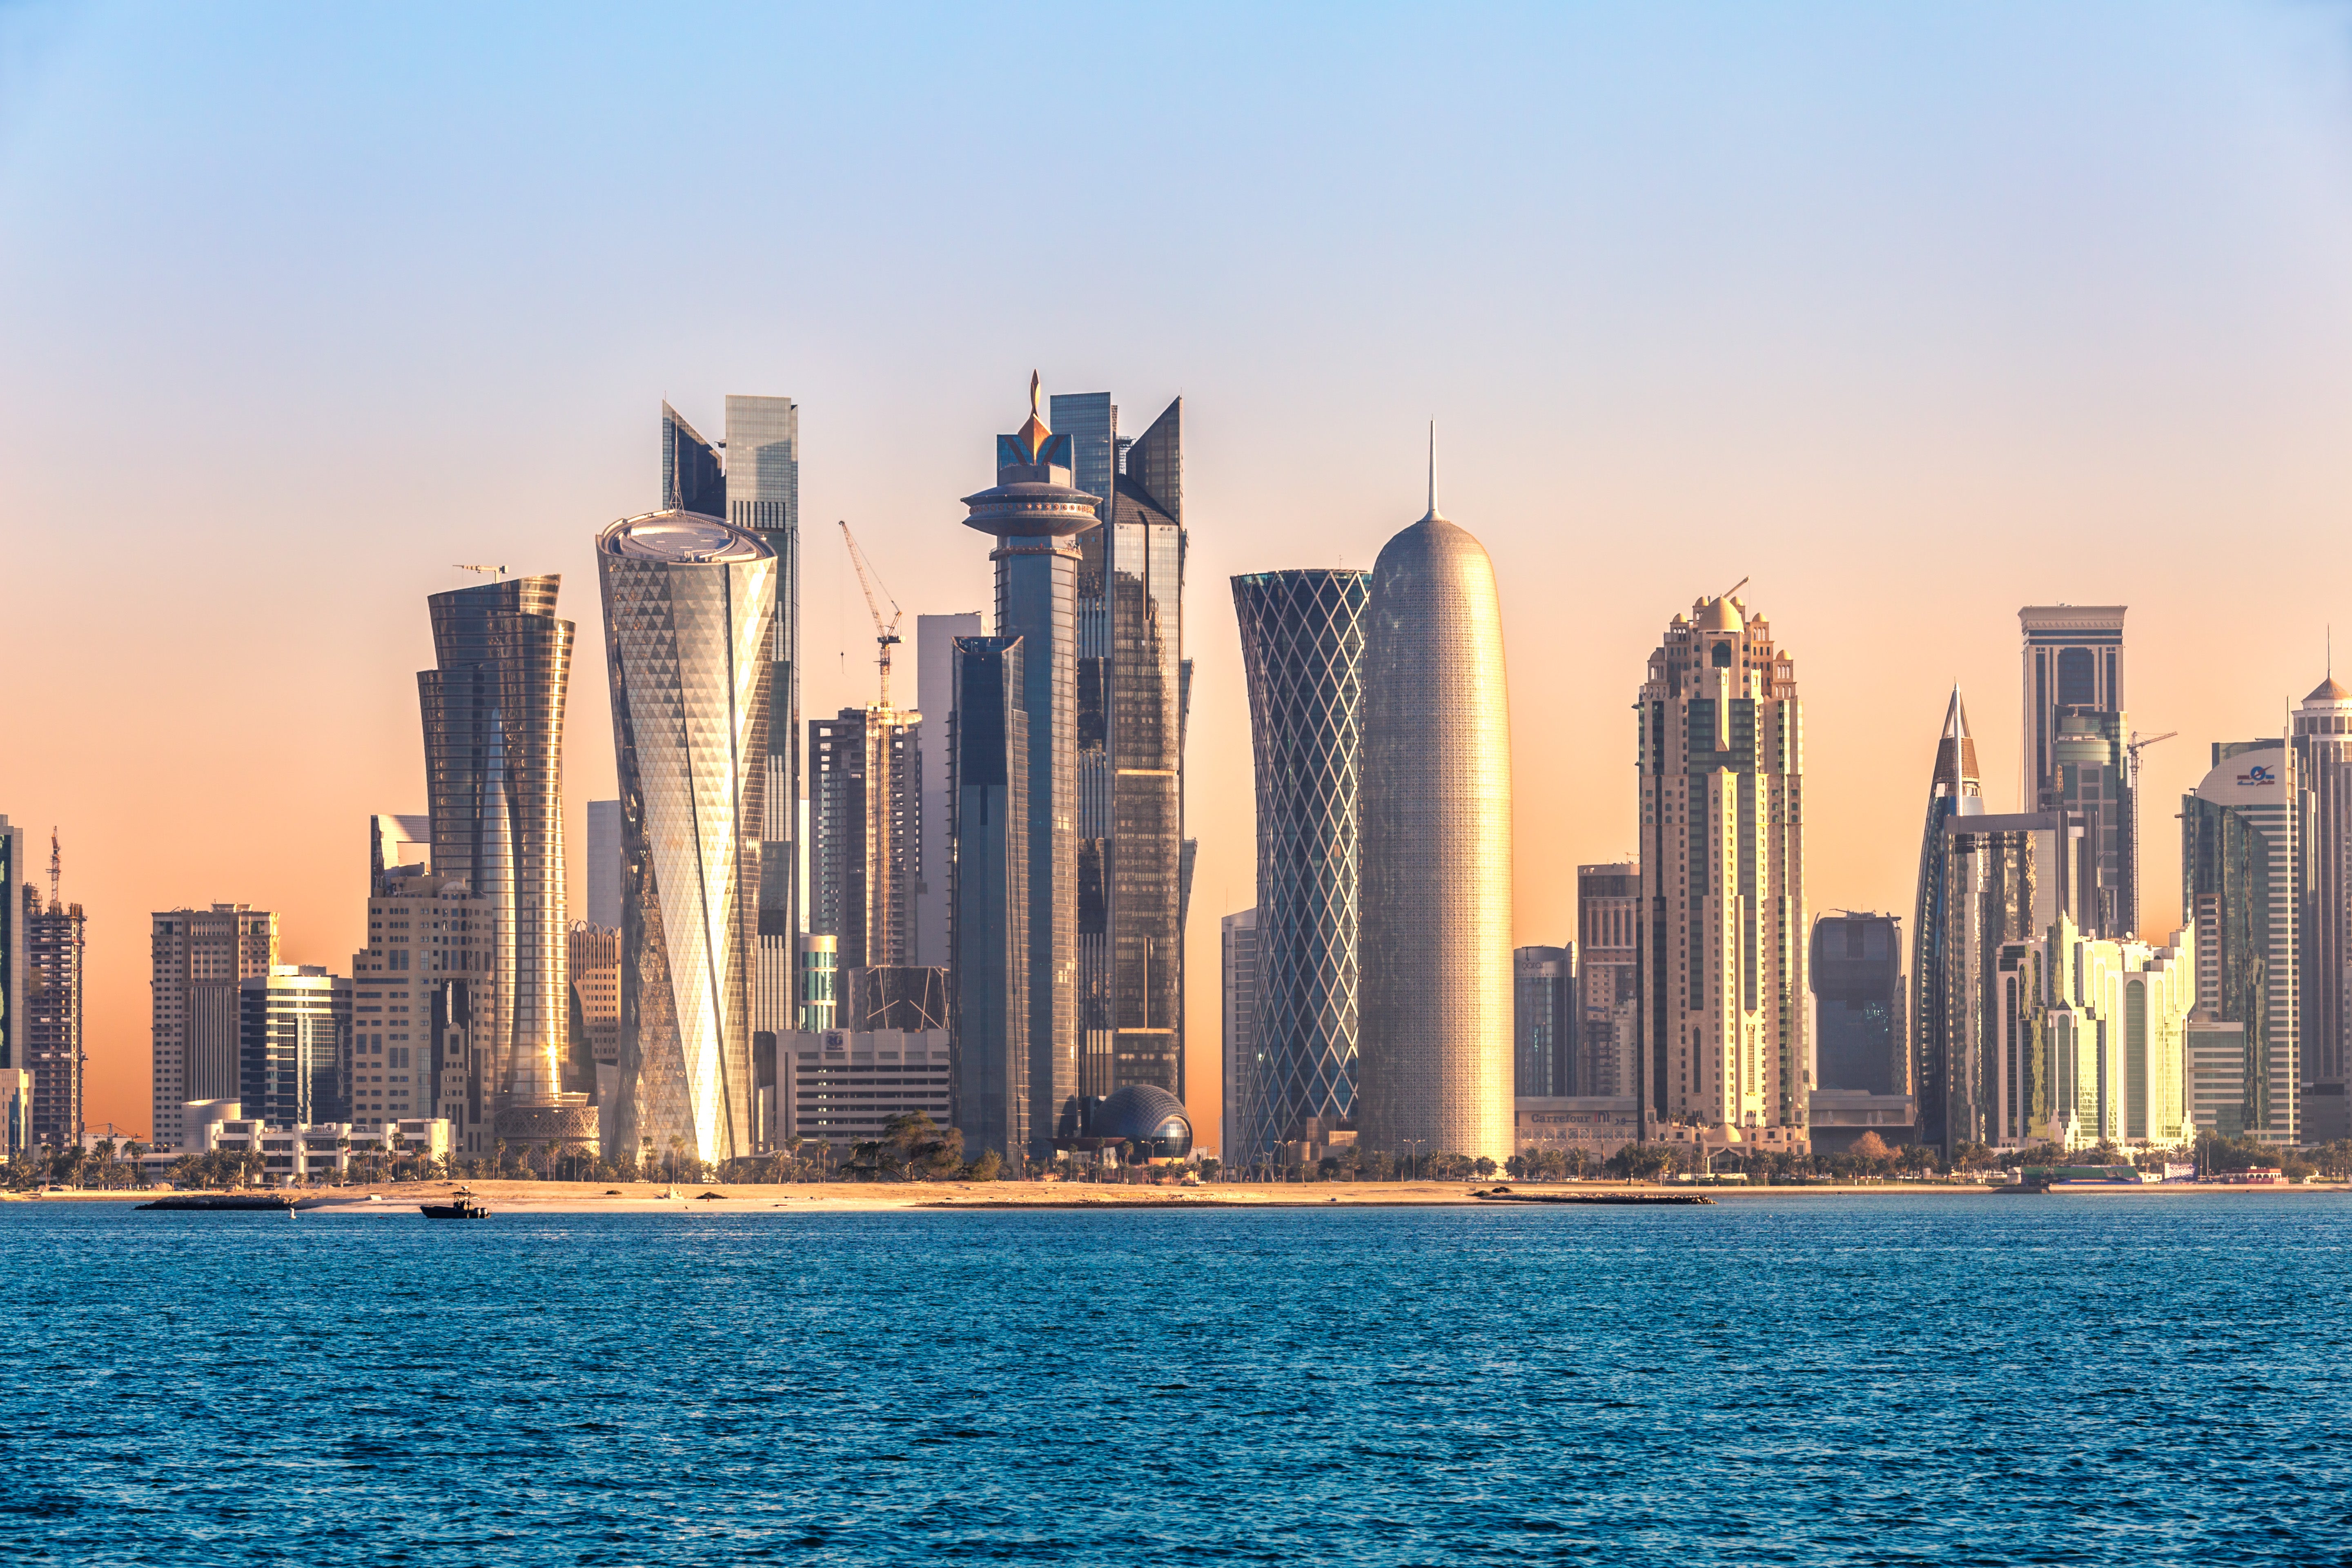 Катар страна газ